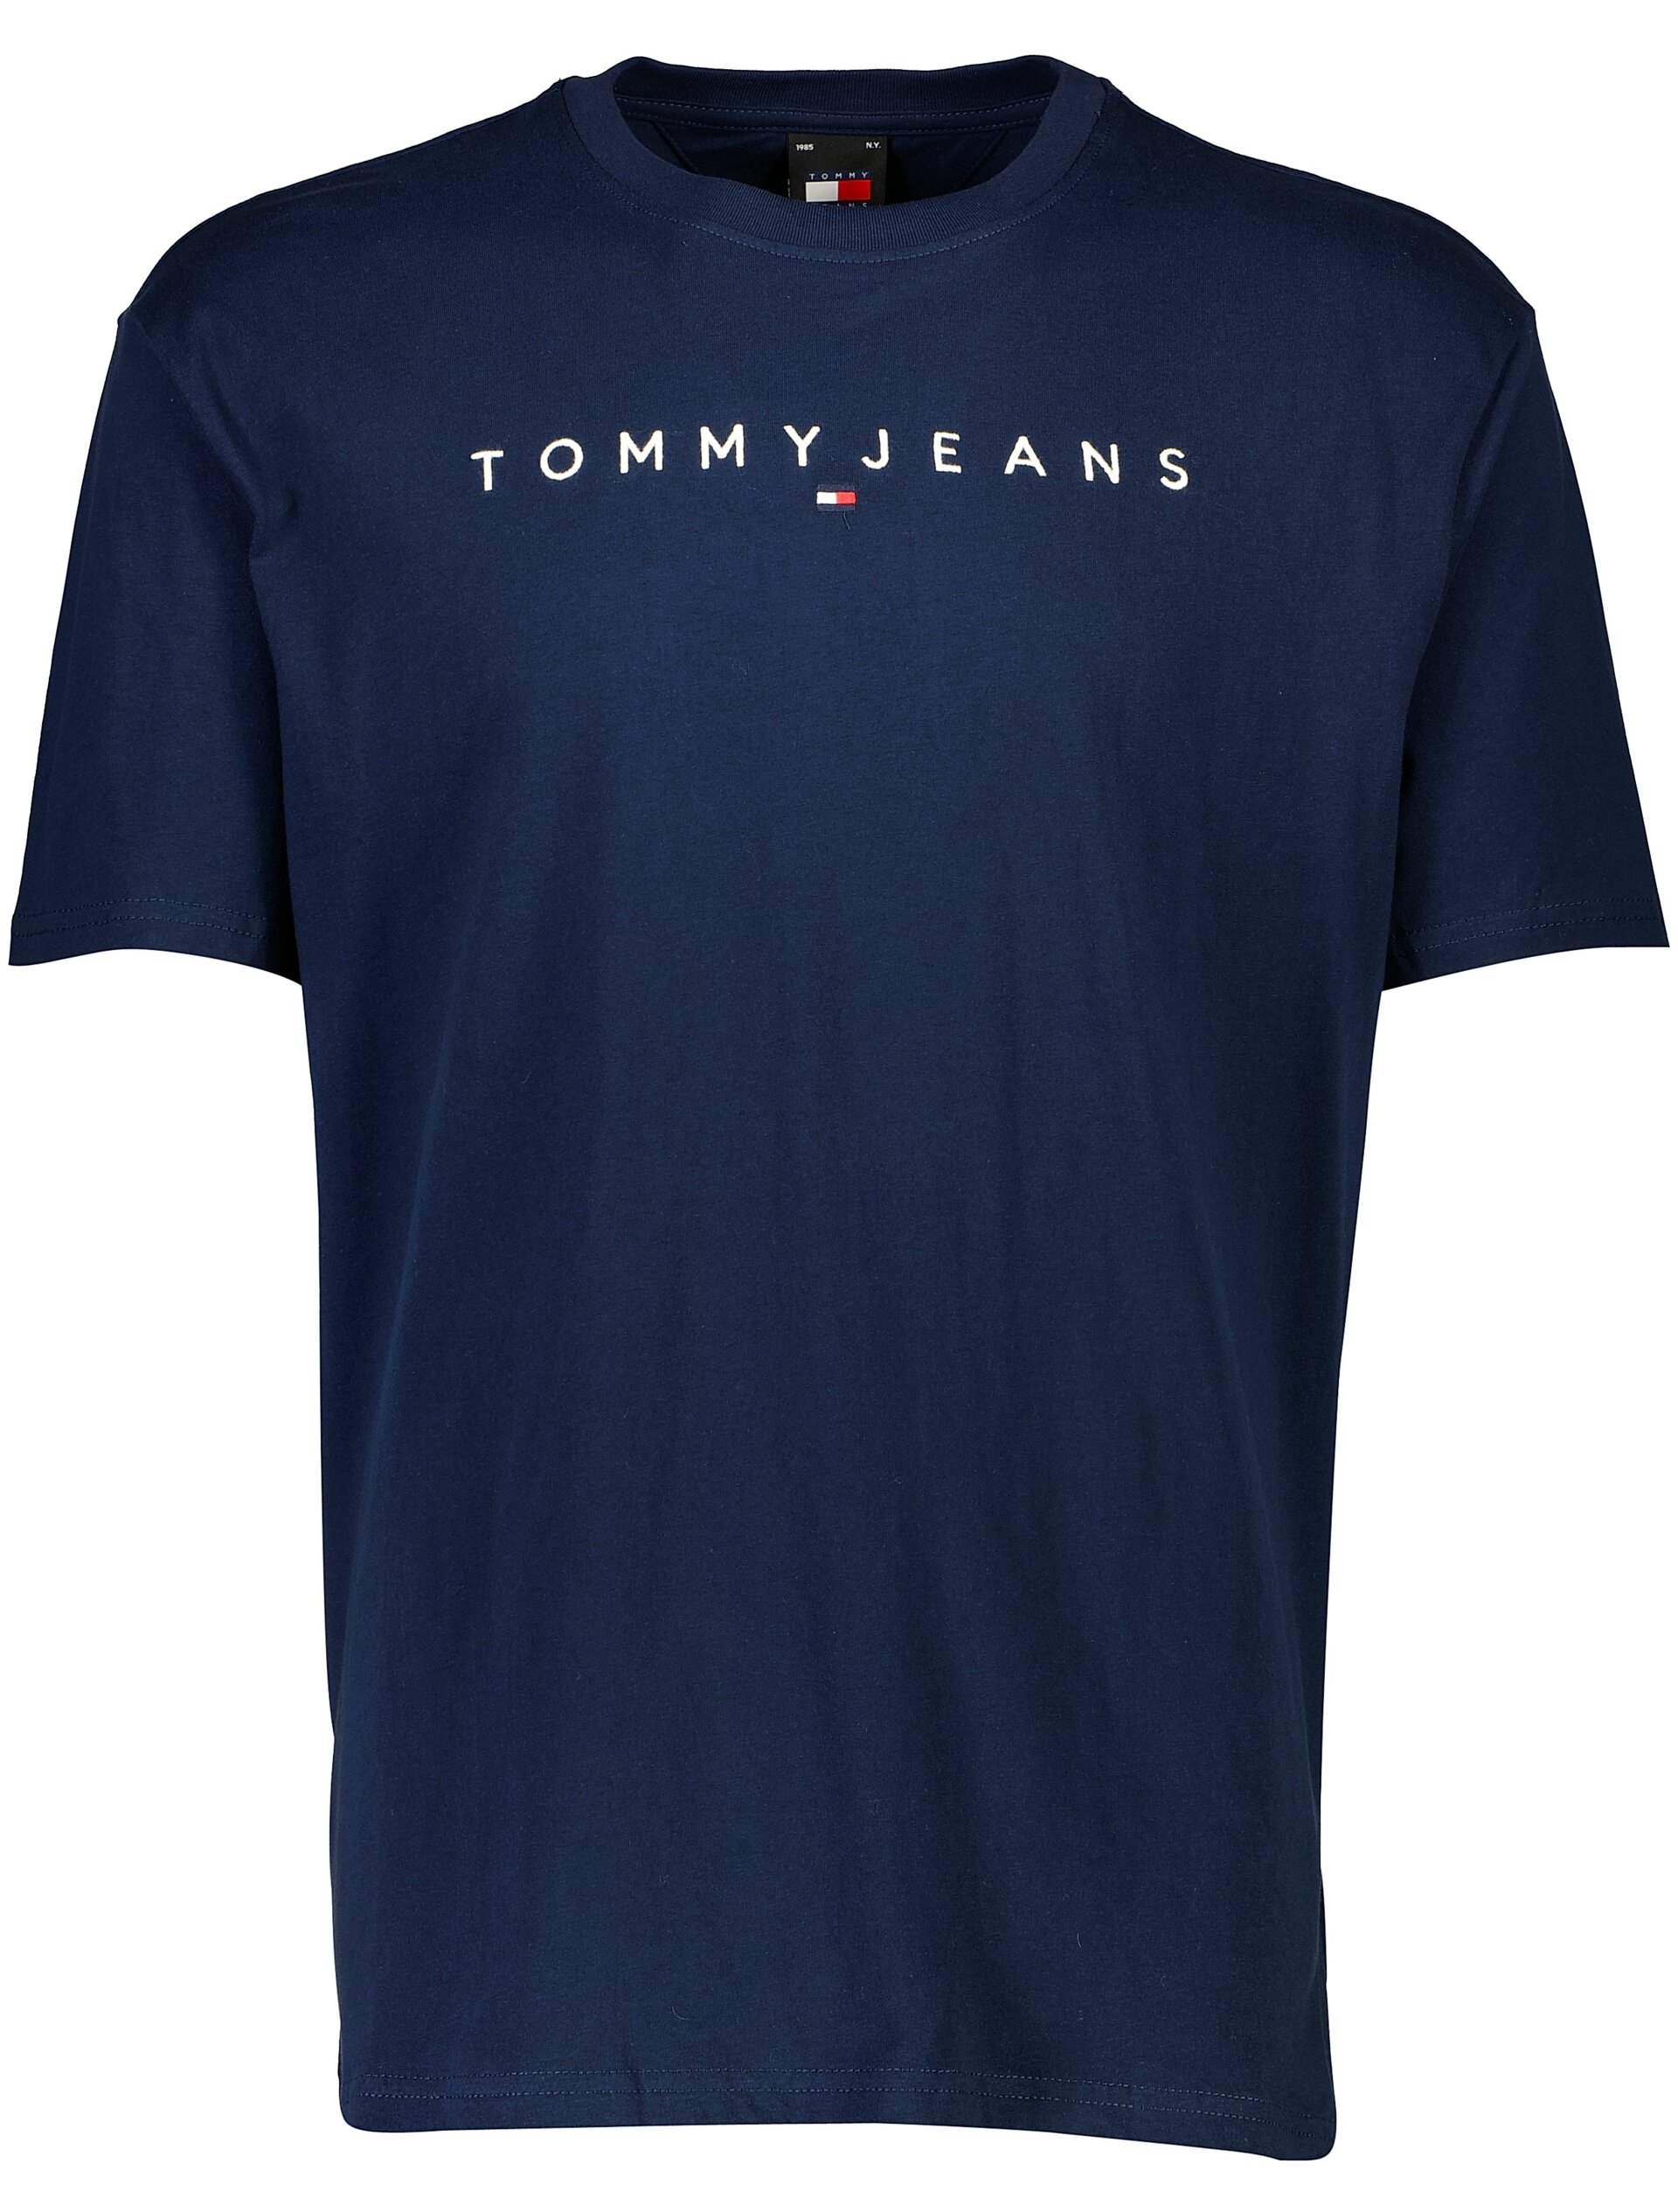 Tommy Jeans T-shirt blå / c1g navy